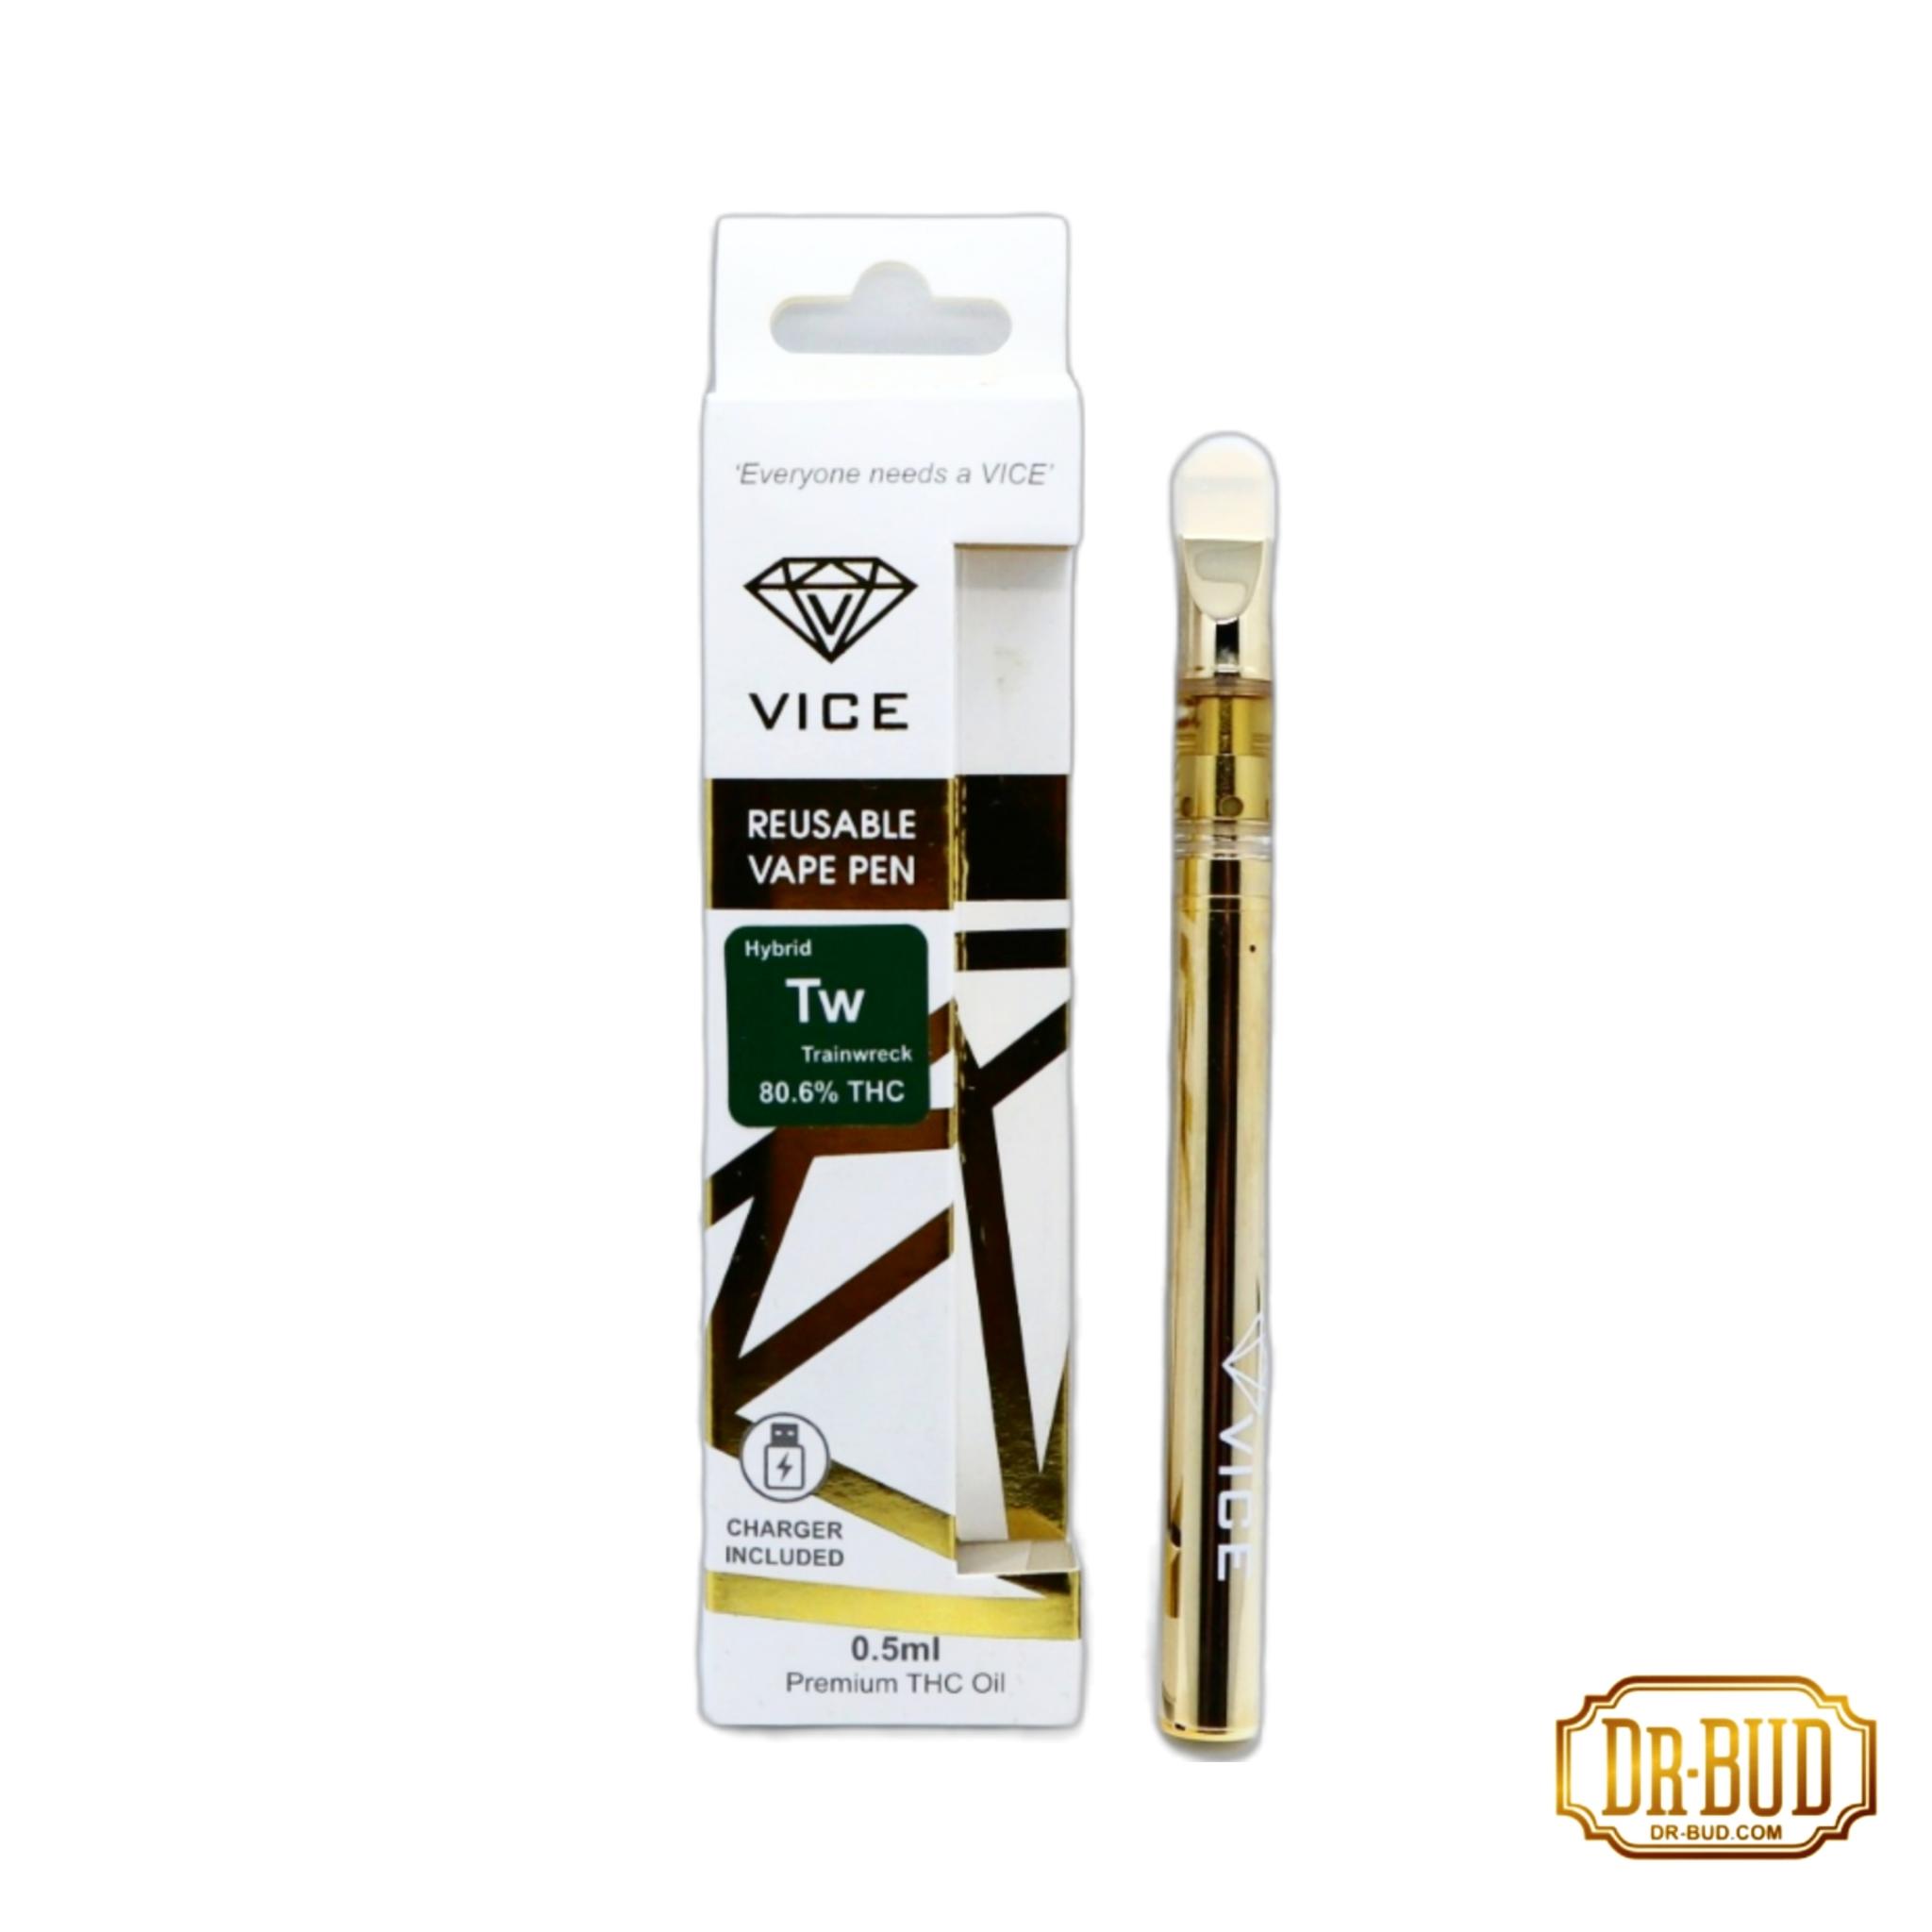 VICE Reusable Vape Pen – Gold / Trainwreck